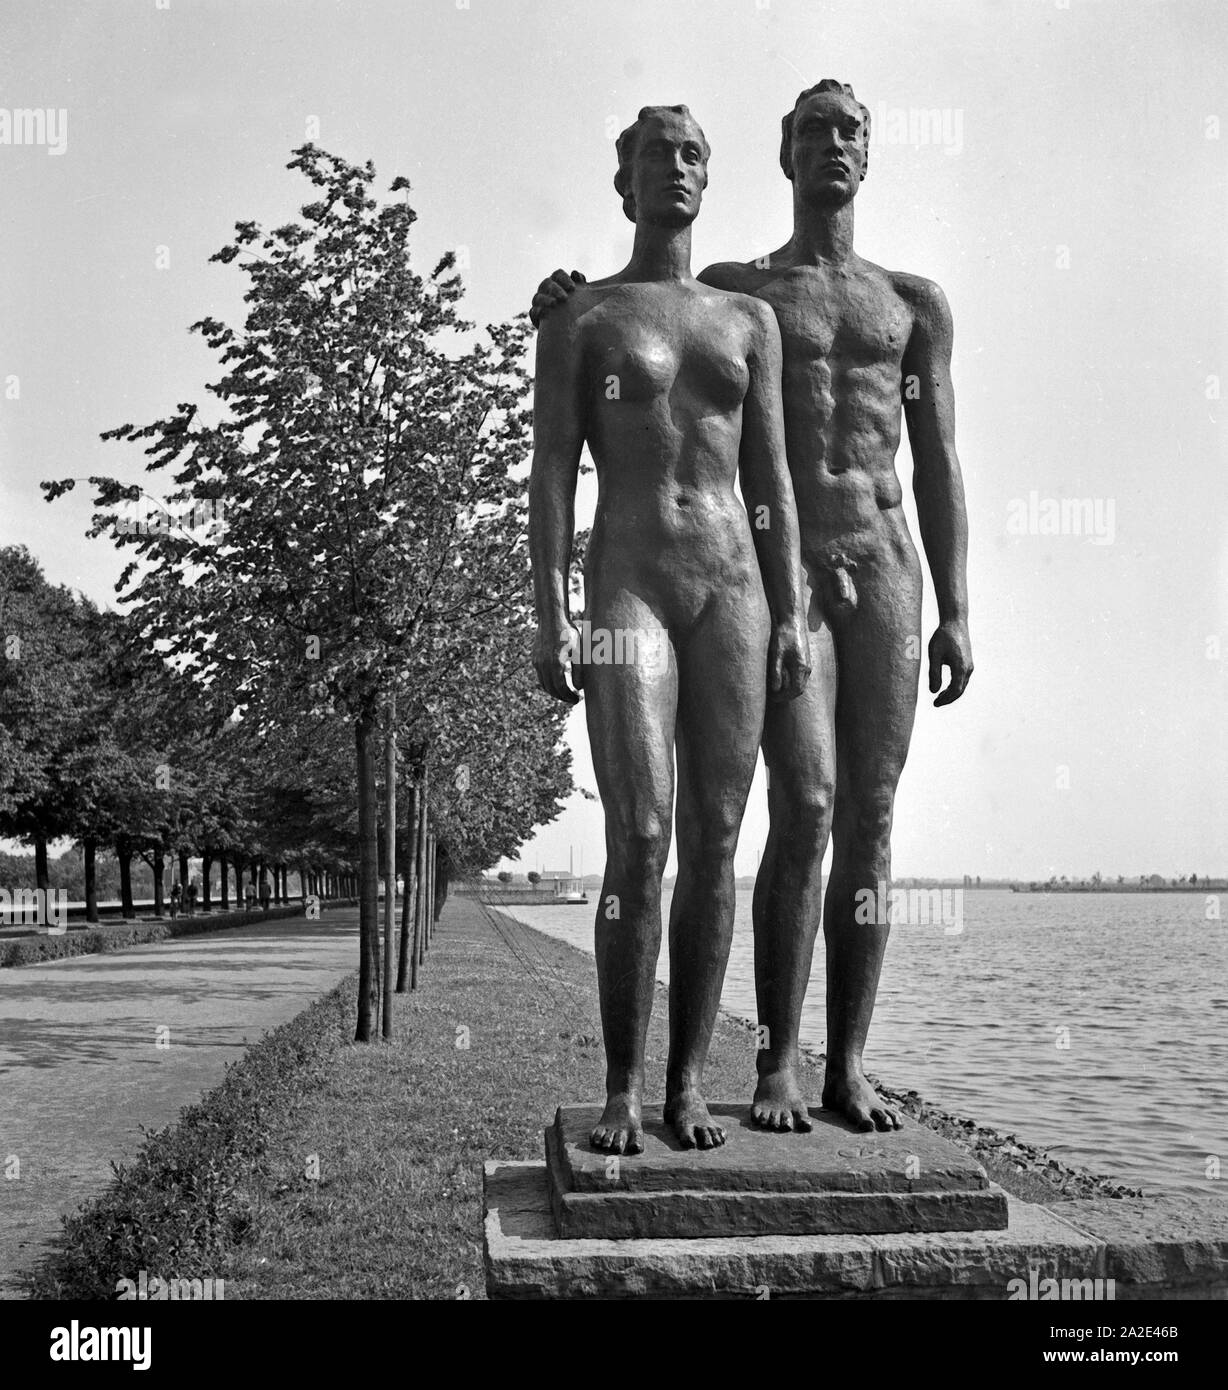 Die Skulptur 'Paar' des Bildhauers Georg Kolbe à Hannover, Deutschland 1930er Jahre. La sculpture 'couple' de l'artiste Georg Kolbe à Hanovre, Allemagne 1930. Banque D'Images